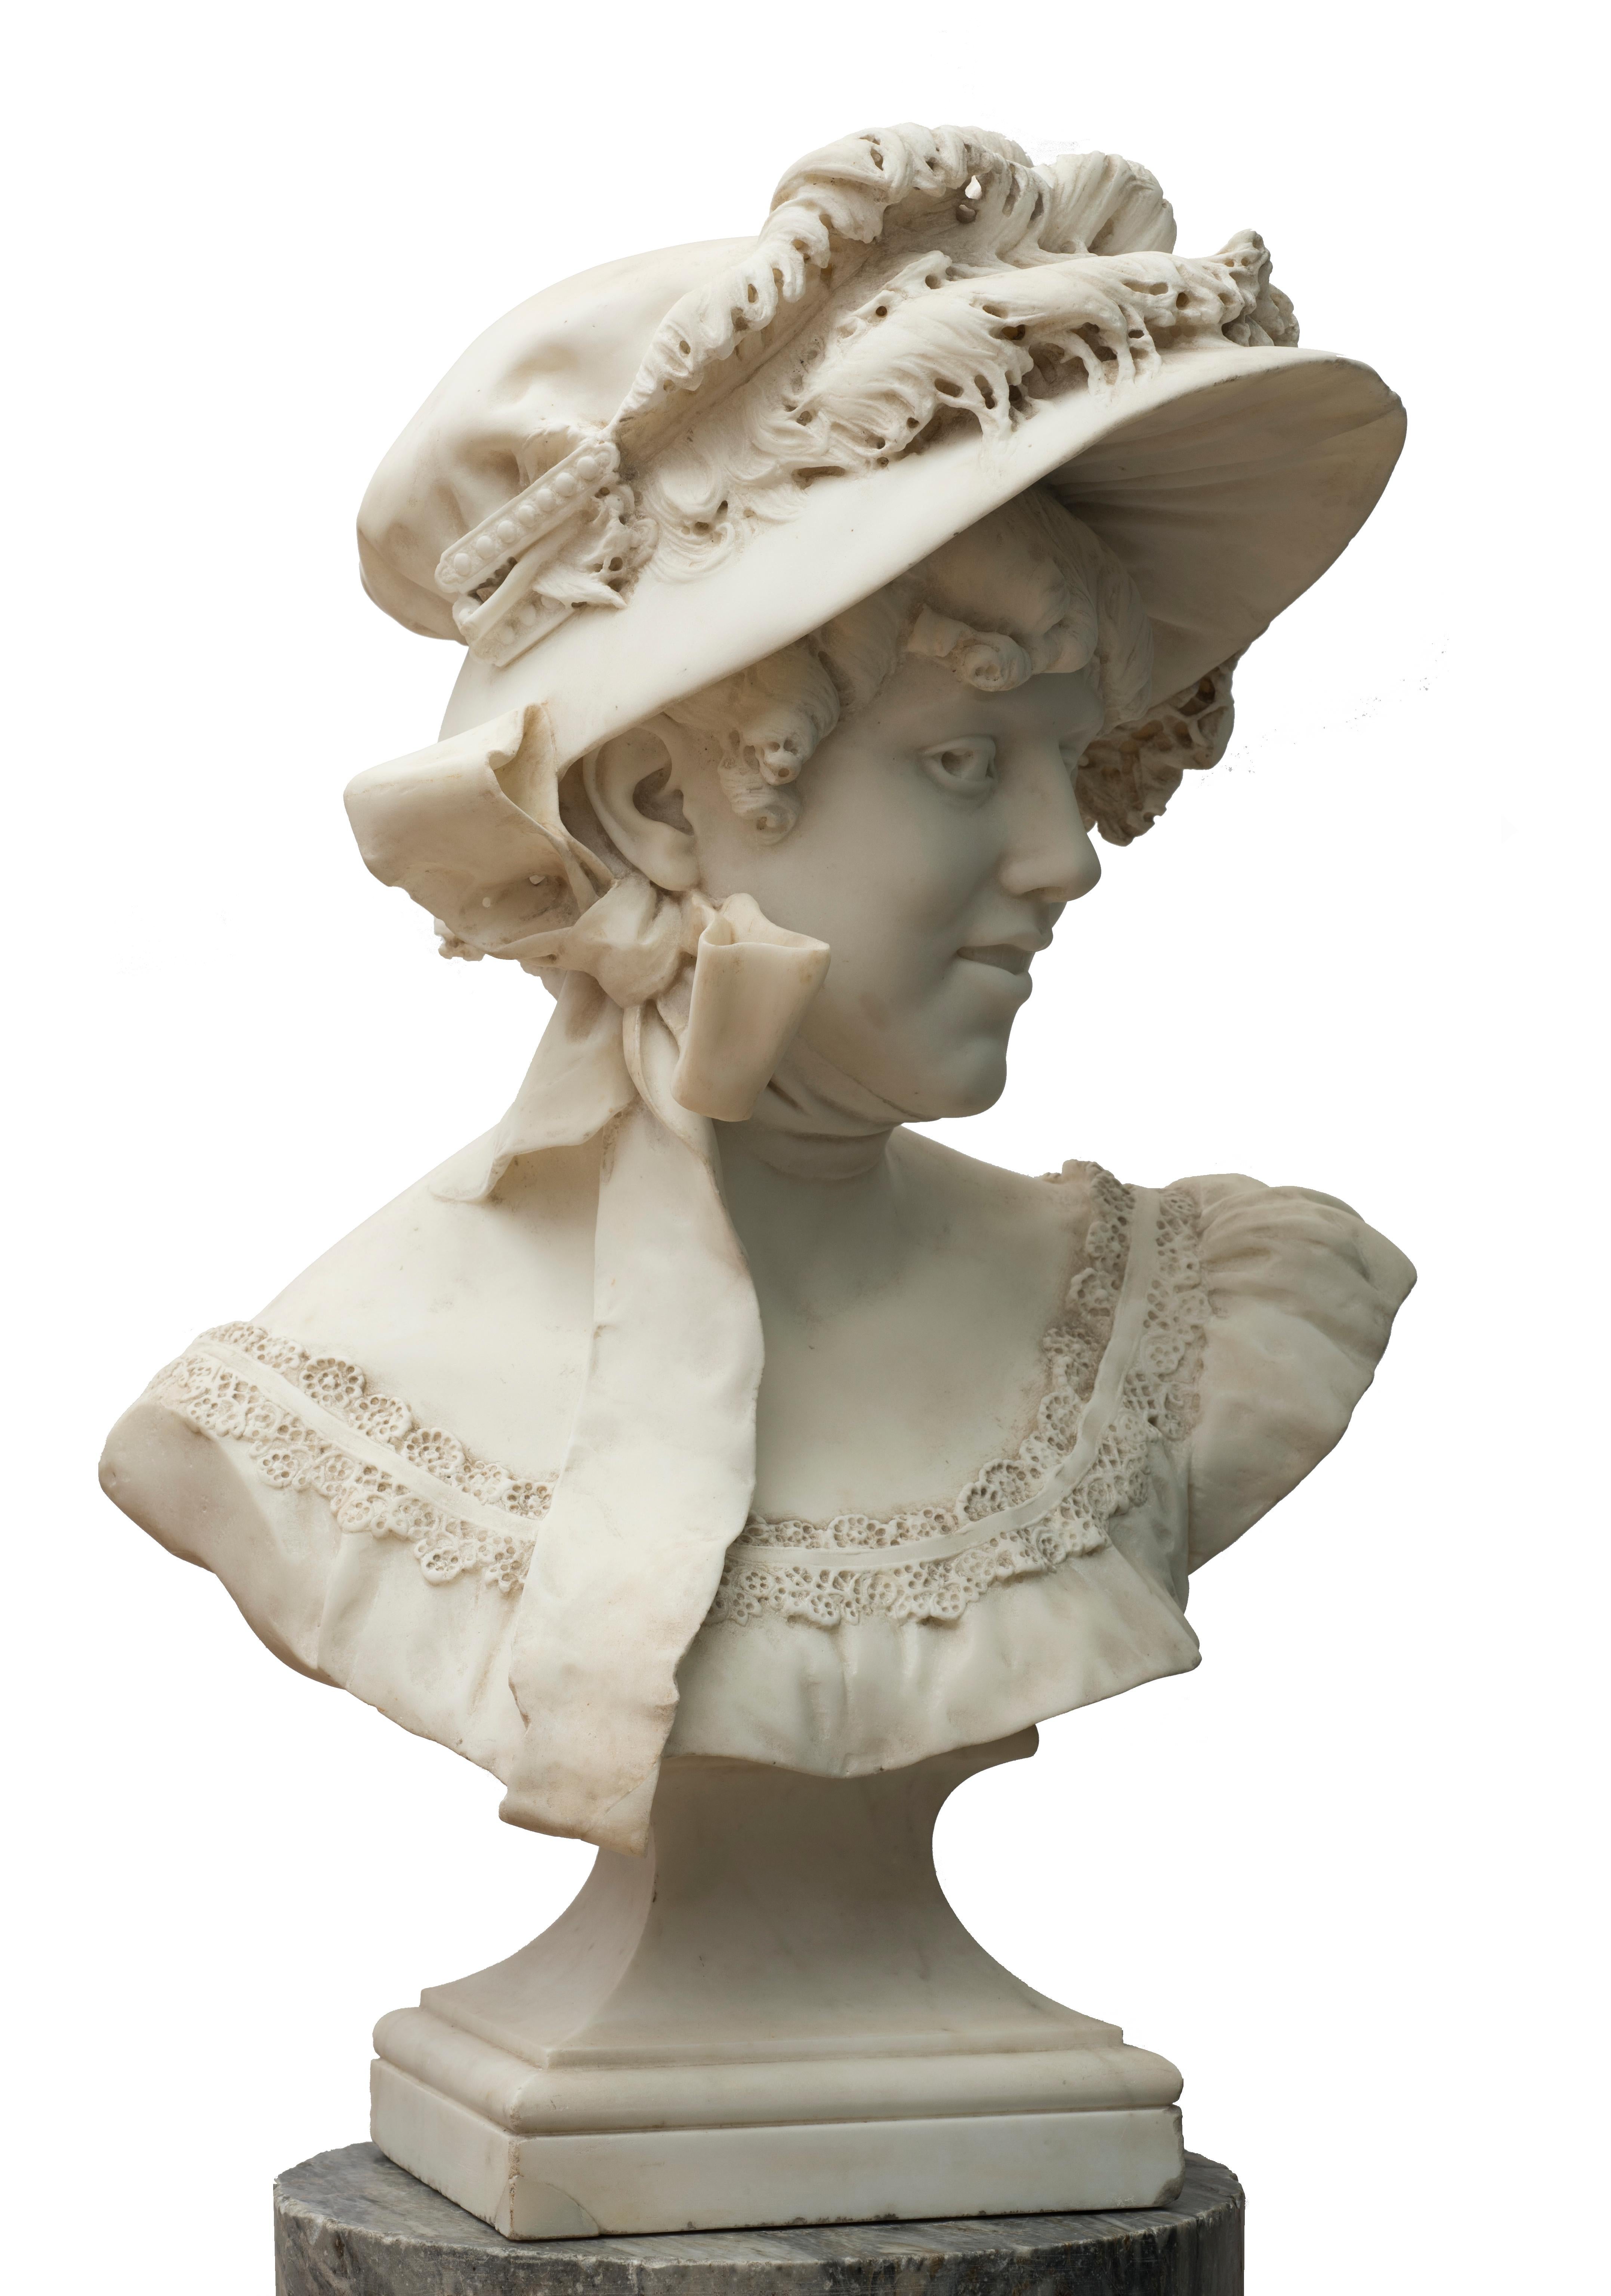 Luigi Preatoni Figurative Sculpture - Maiden with hat